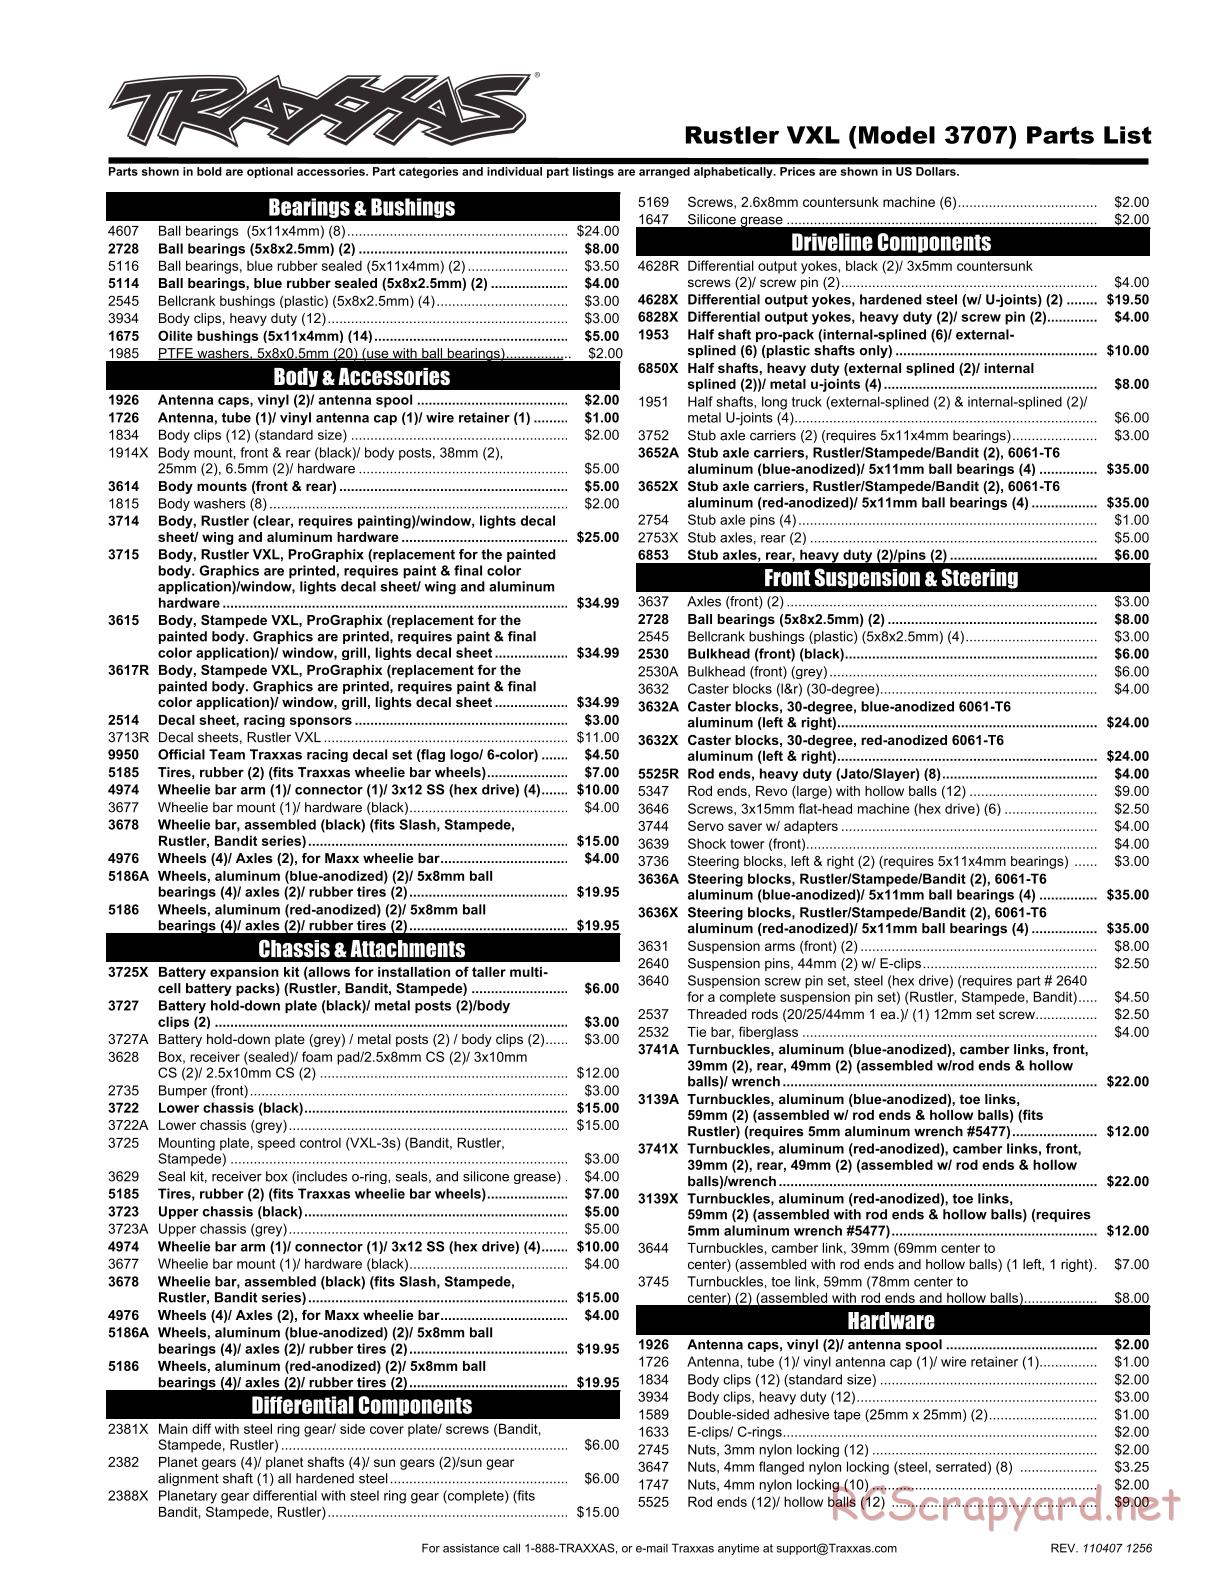 Traxxas - Rustler VXL - Parts List - Page 1